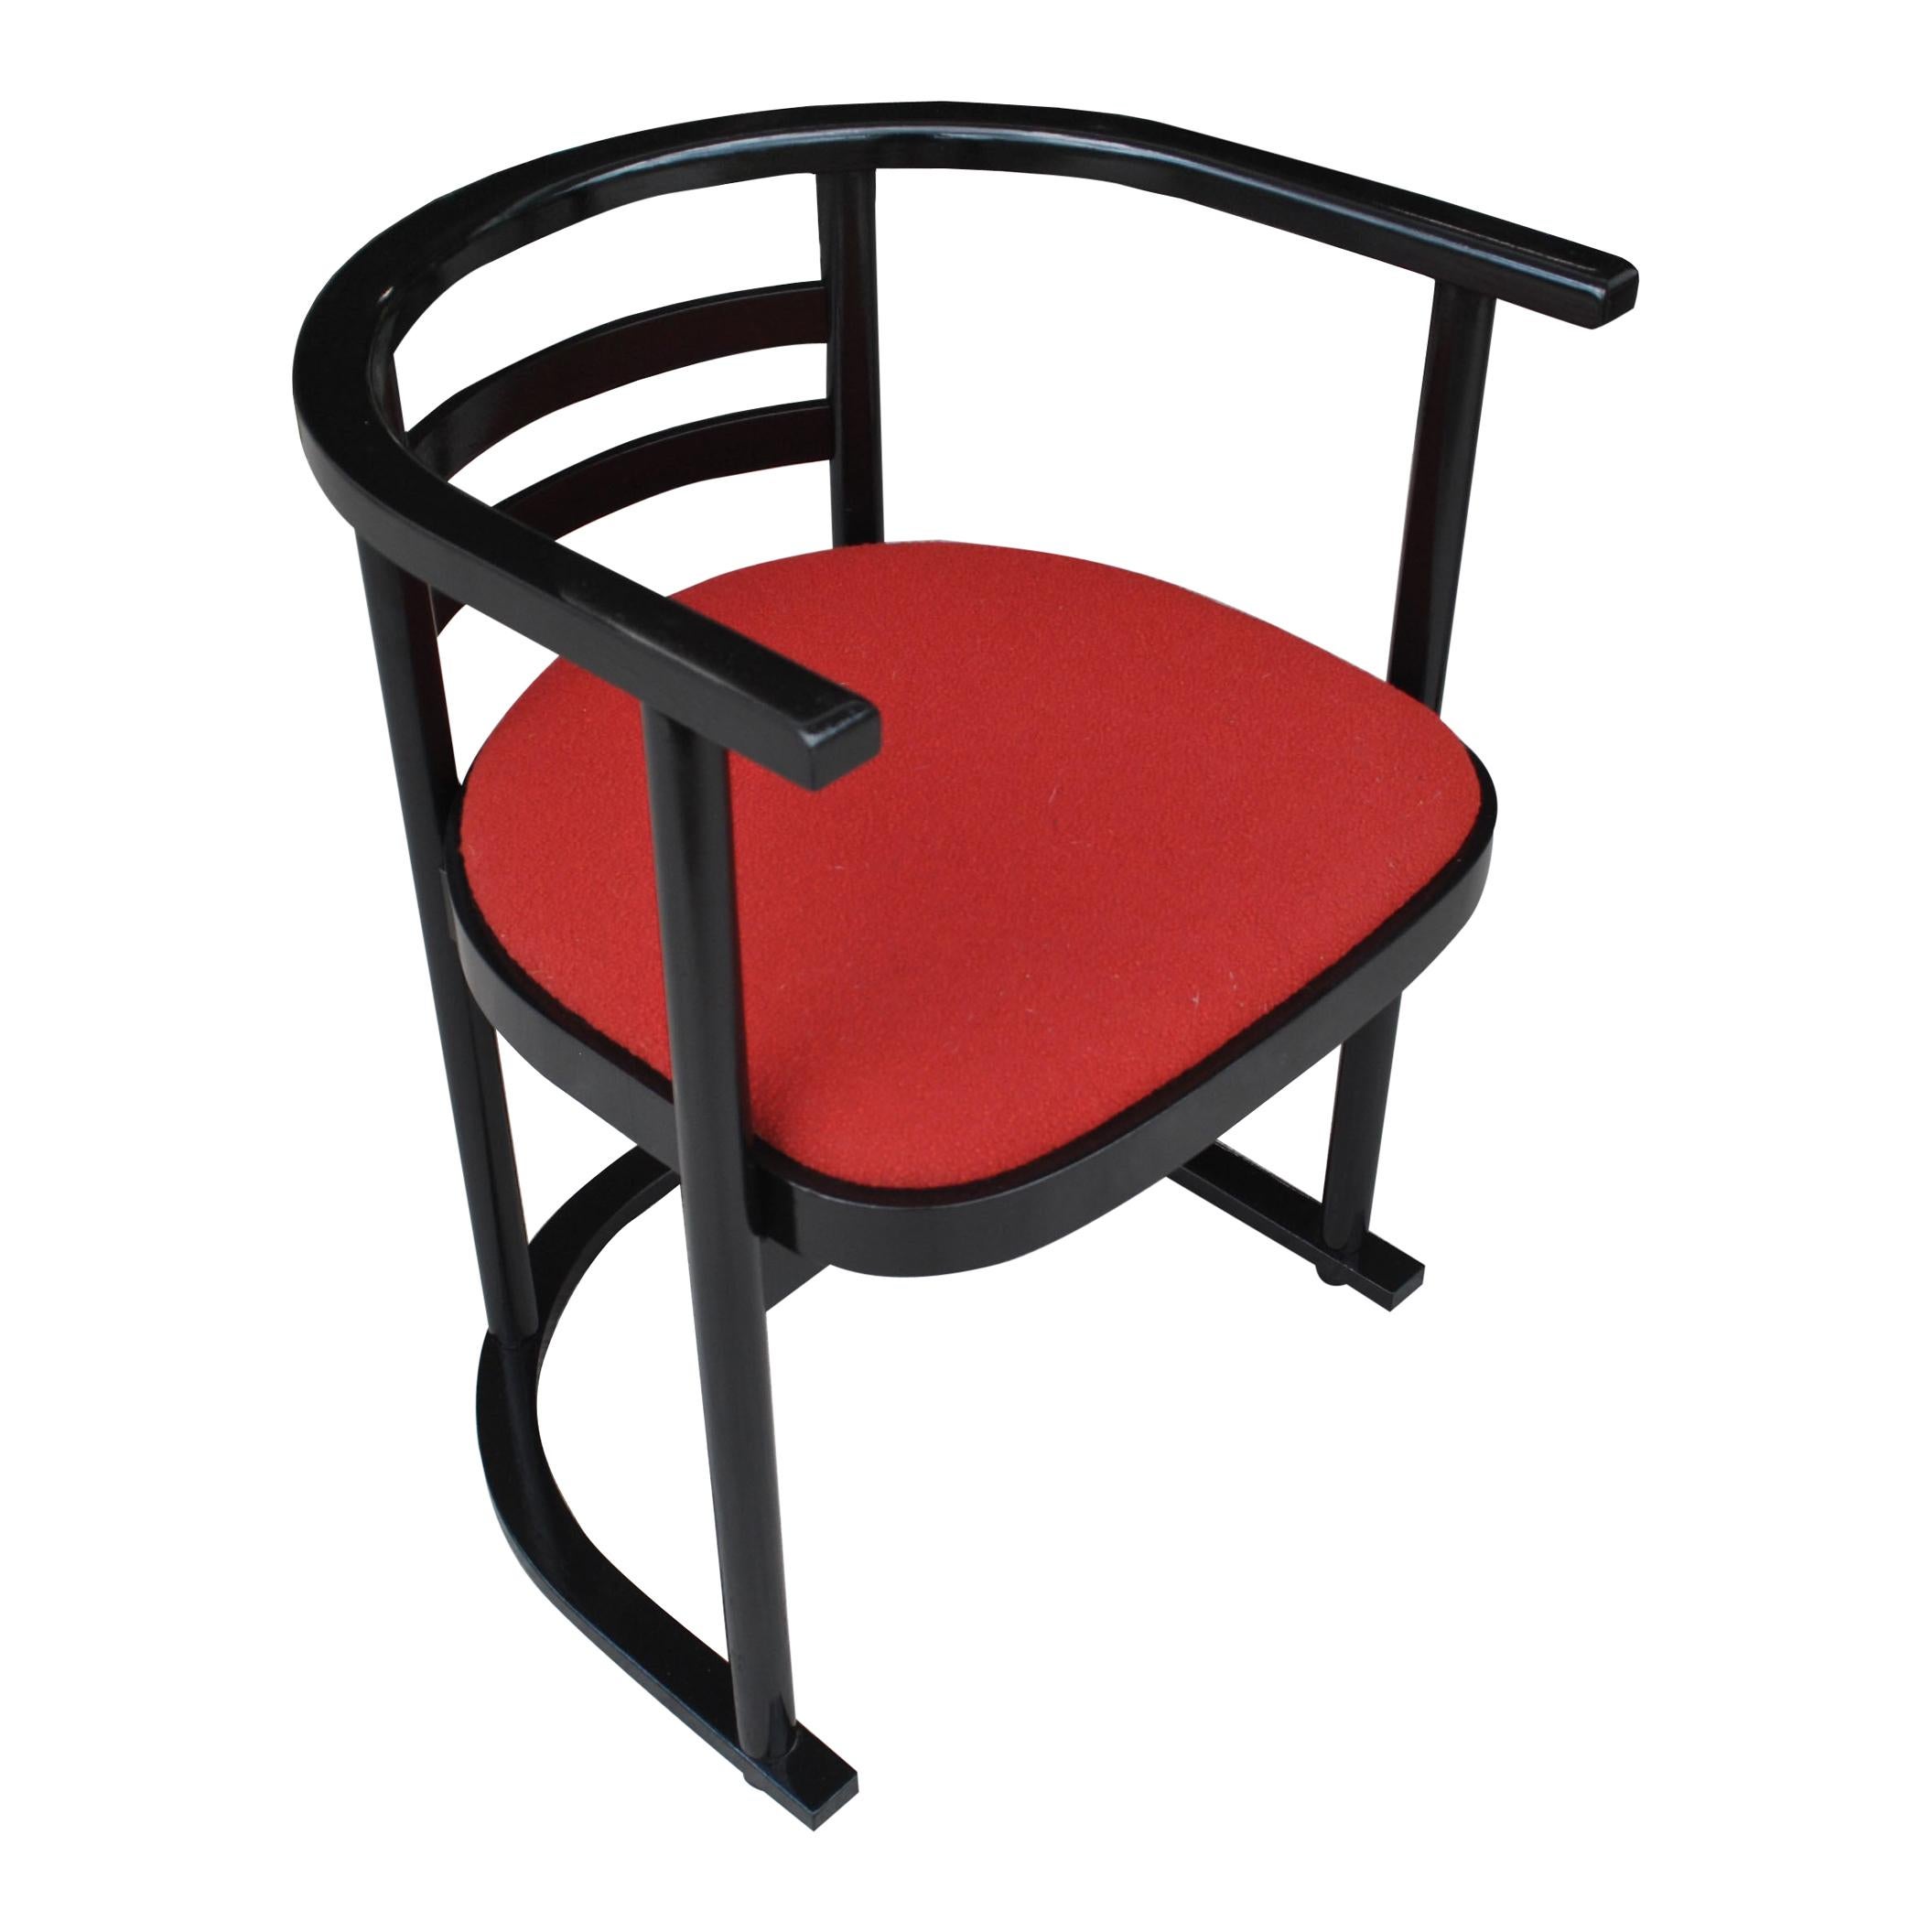 1 Vintage Thonet Josef Hoffmann Style Bauhaus Chair For Sale